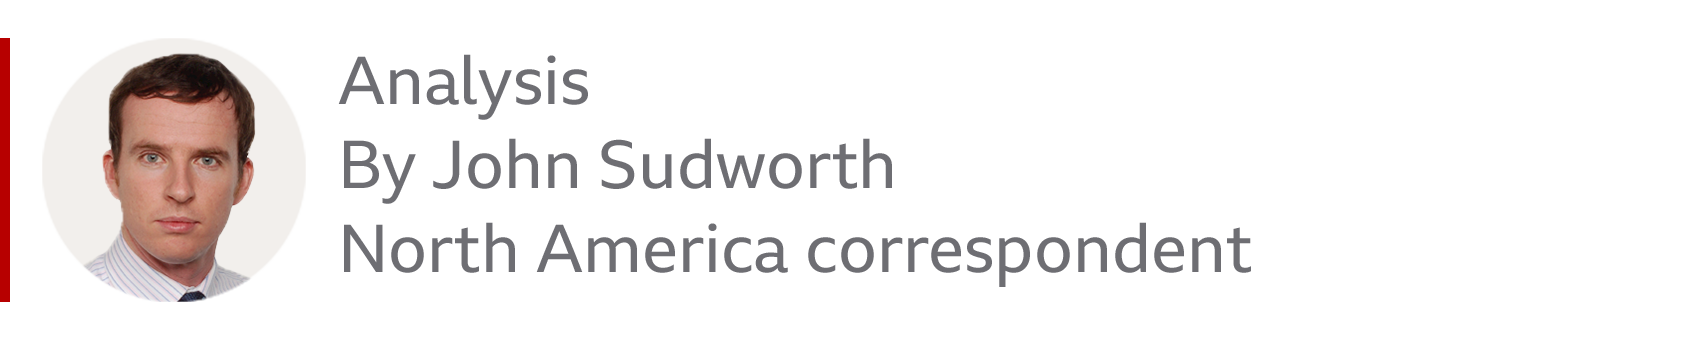 Analysis box by John Sudworth, North America correspondent